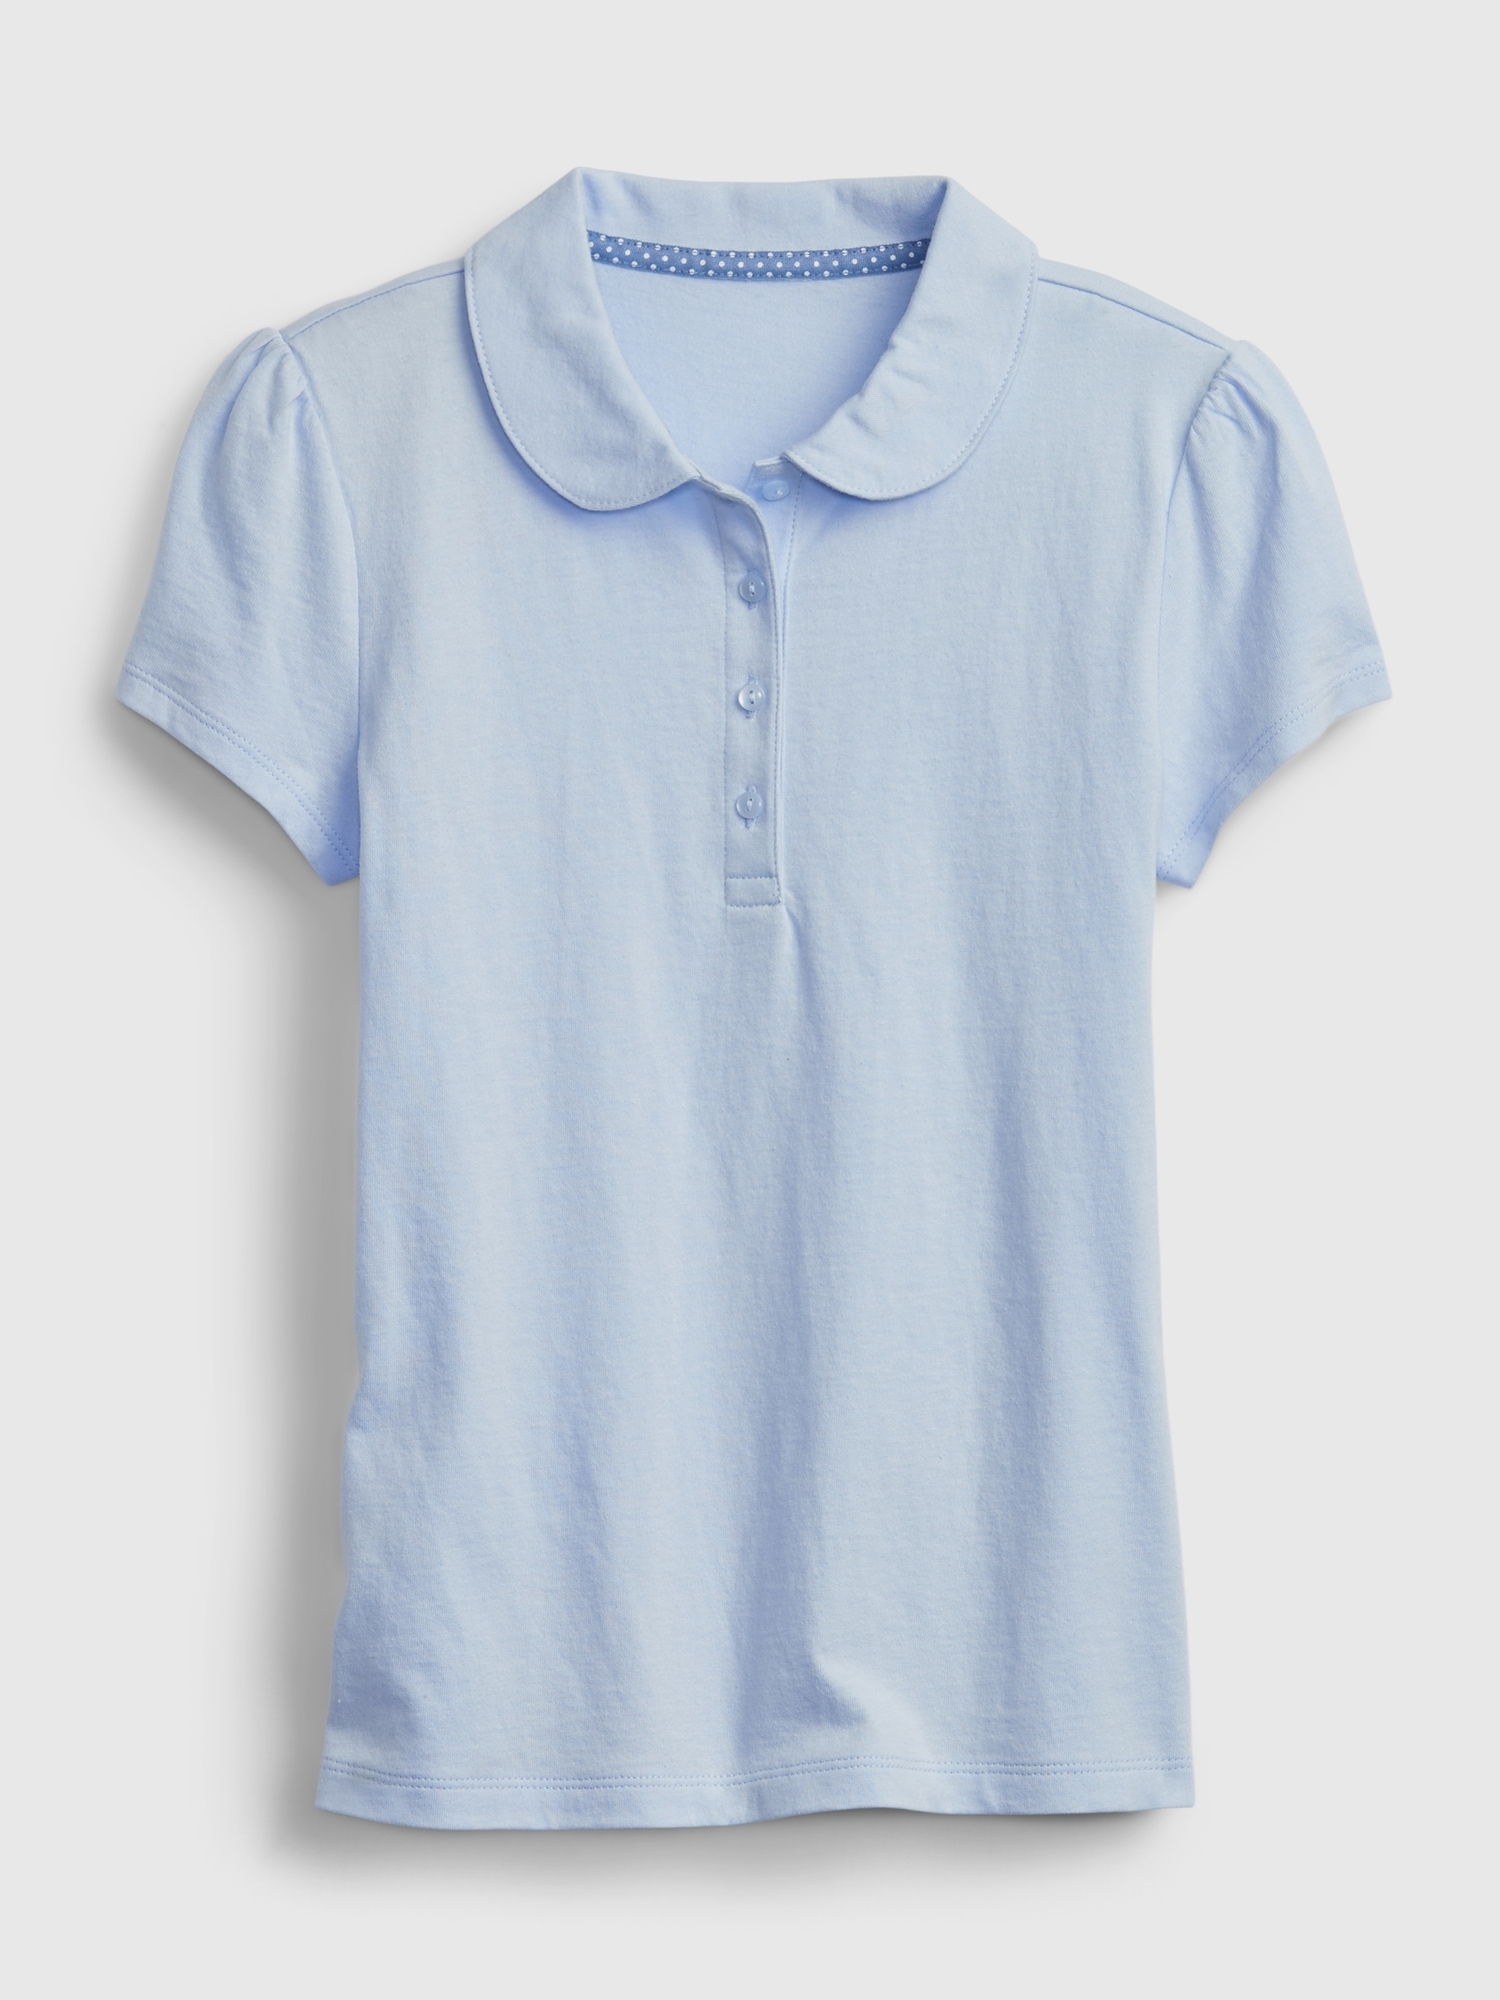 Gap Kids 100% Organic Cotton Uniform Polo Shirt blue. 1